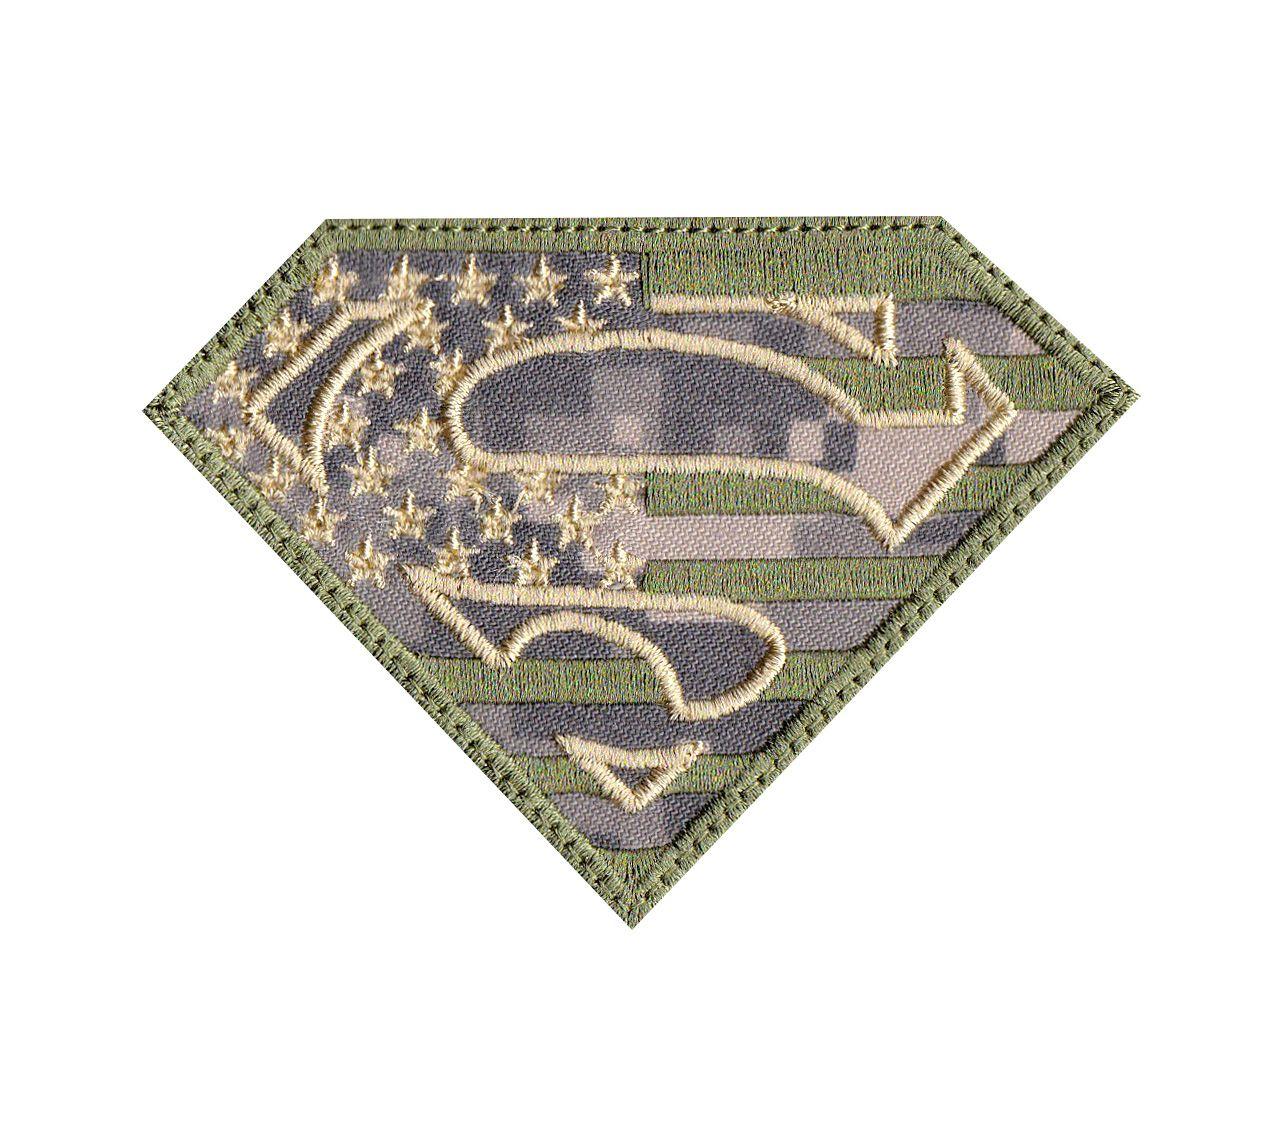 Superman Military Logo - Superman US Flag Camo Military Digicam 3.5 X 2.5 Tactical Morale ...